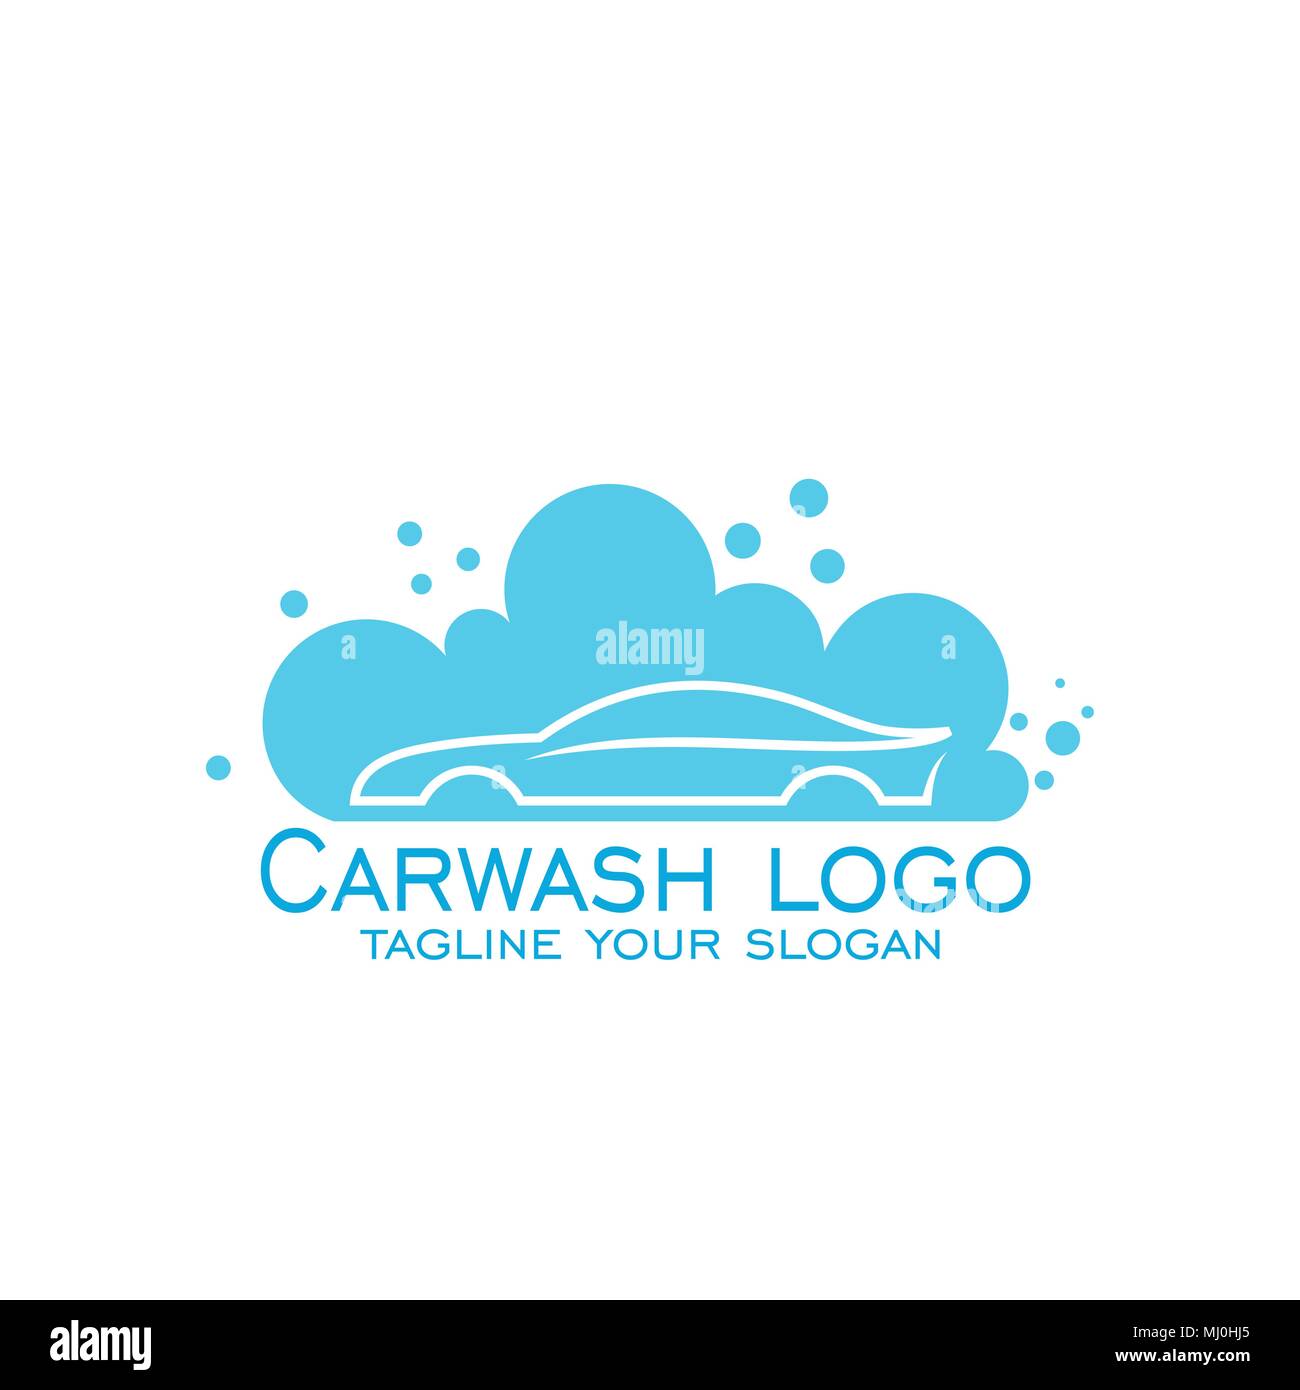 Carwash logo isolated on white background. Vector emblem for car